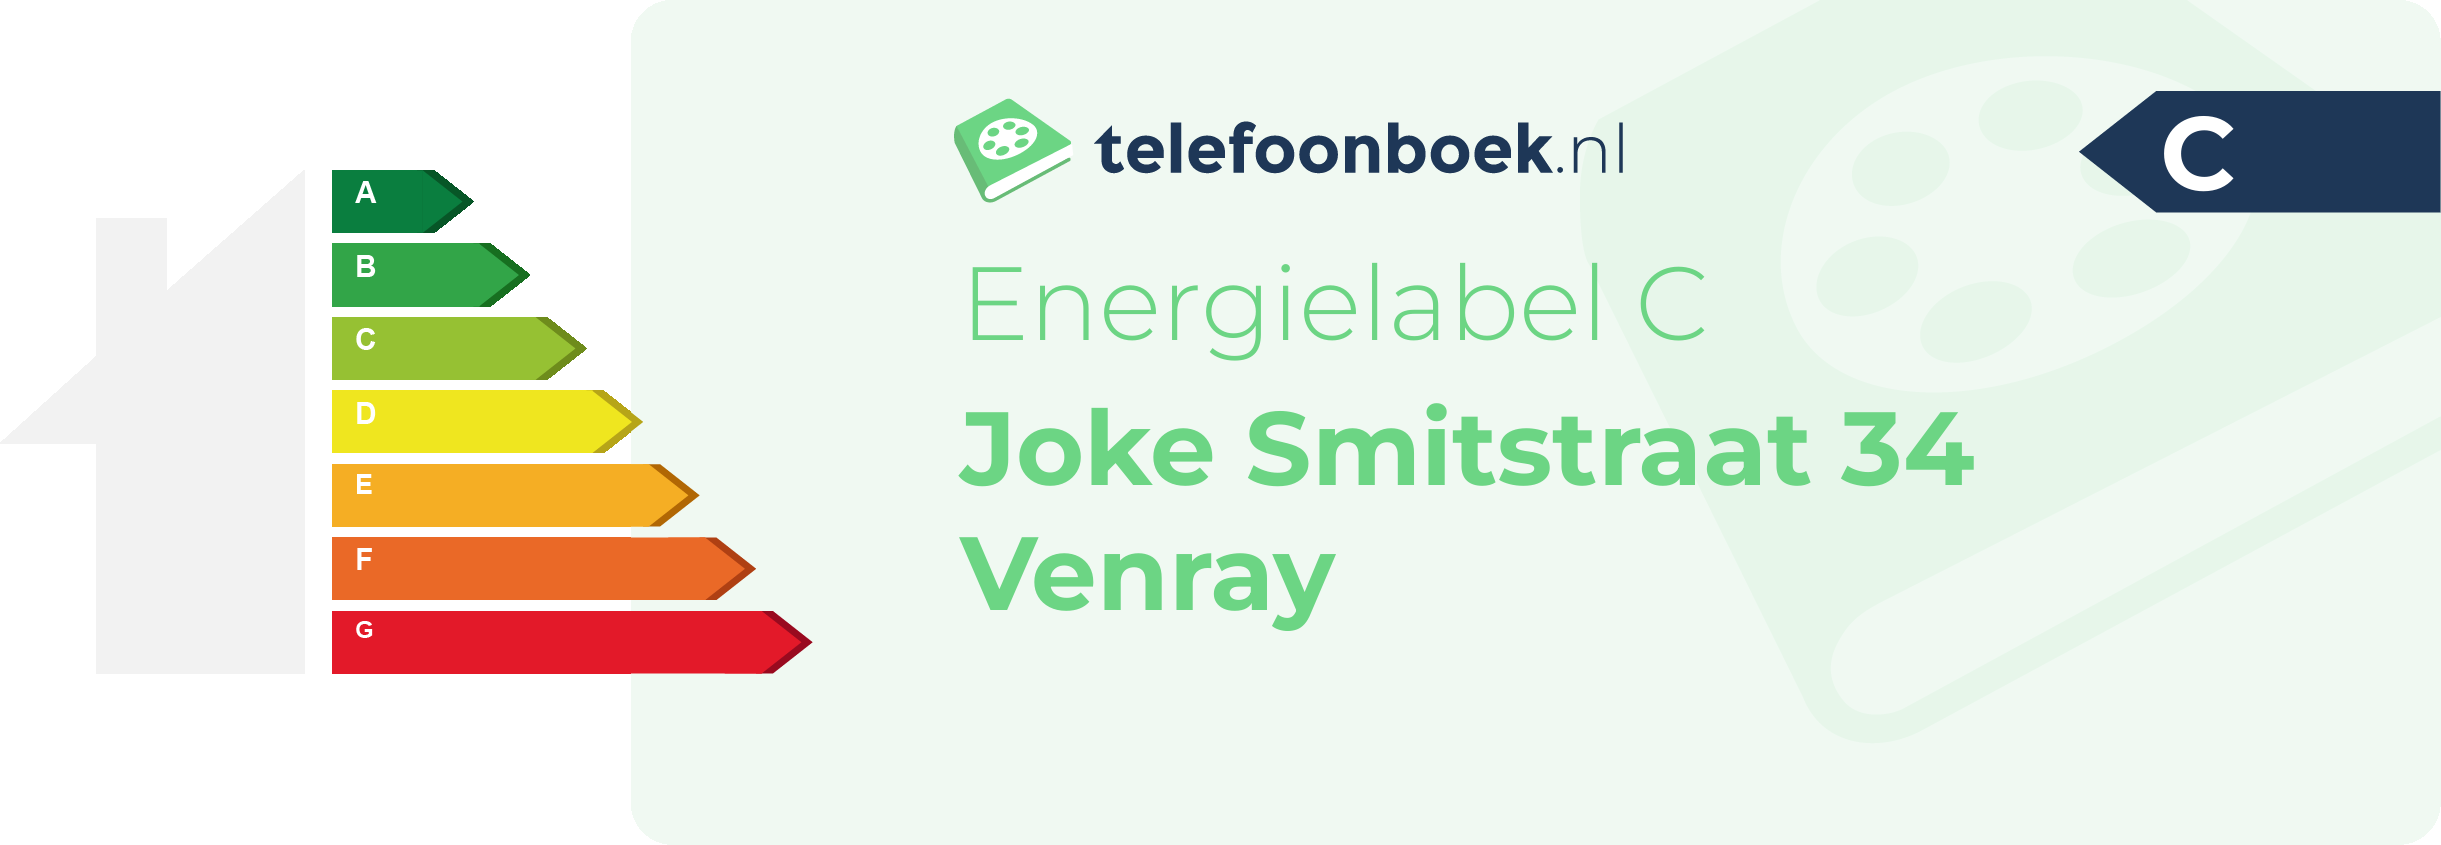 Energielabel Joke Smitstraat 34 Venray